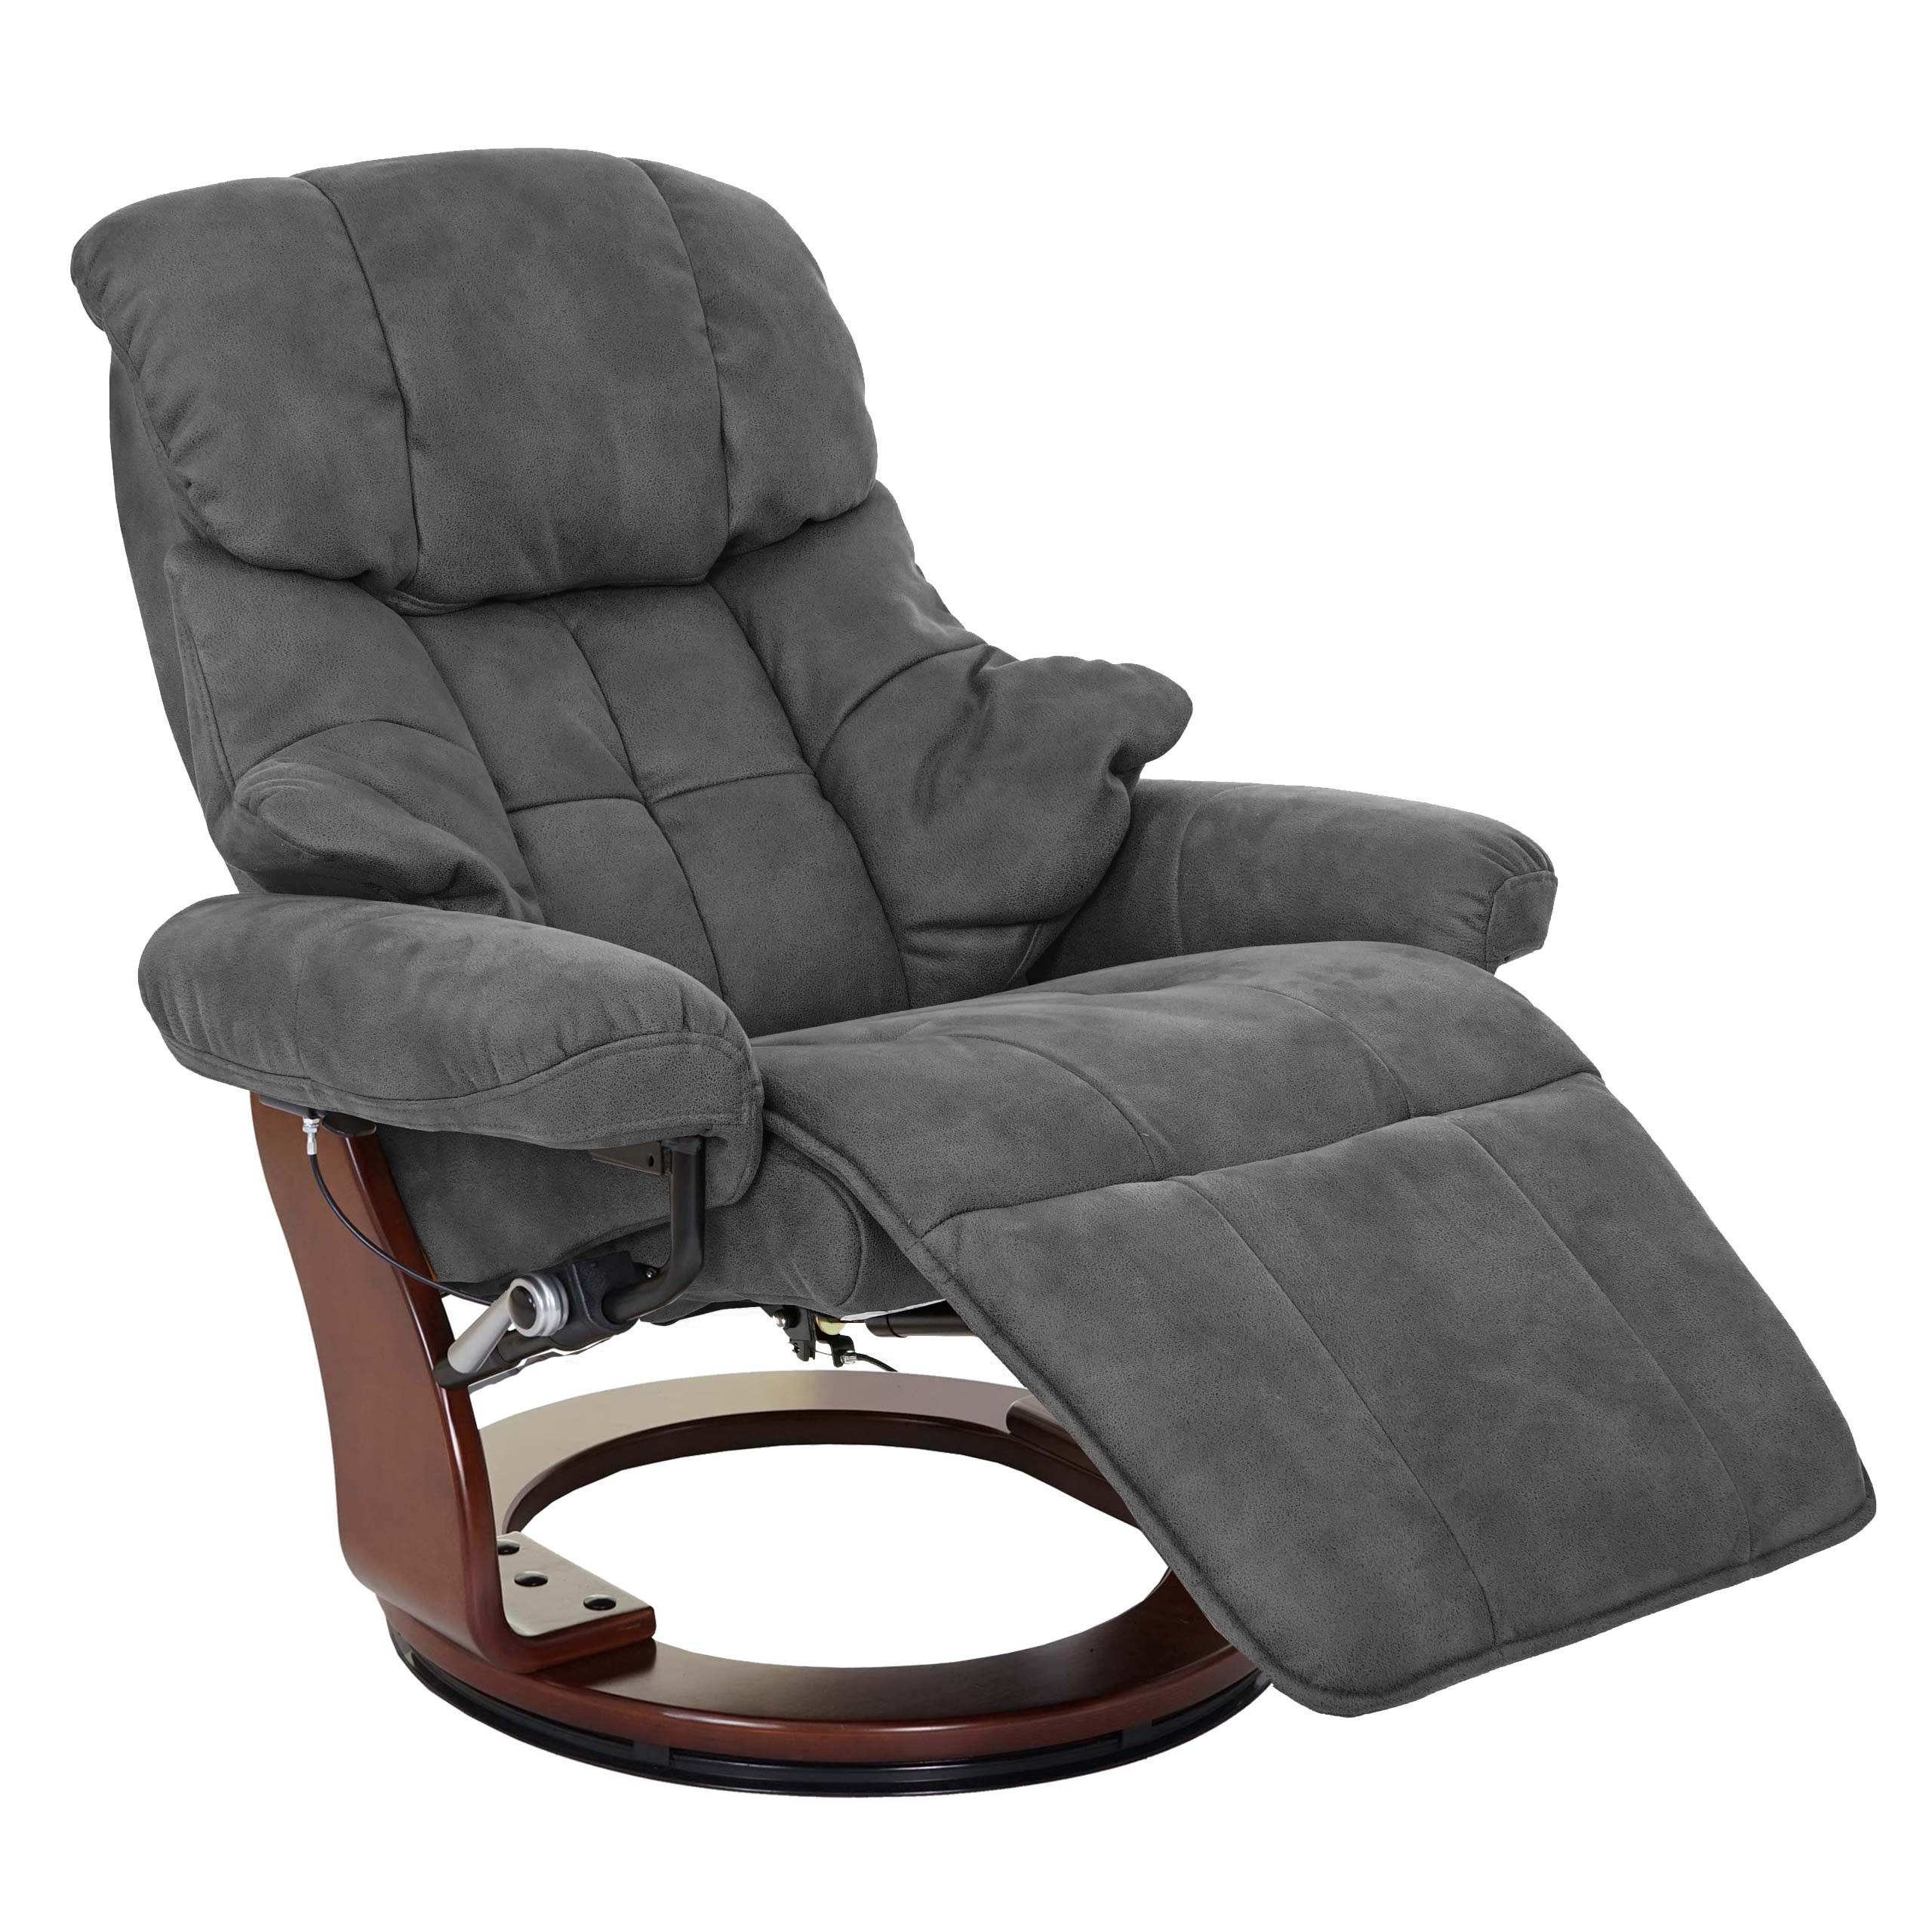 MCA furniture Relaxsessel Windsor 2-S, Fußstütze und Rückenlehne separat verstellbar, extradicke Polsterung dunkelgrau, Walnuss-Optik